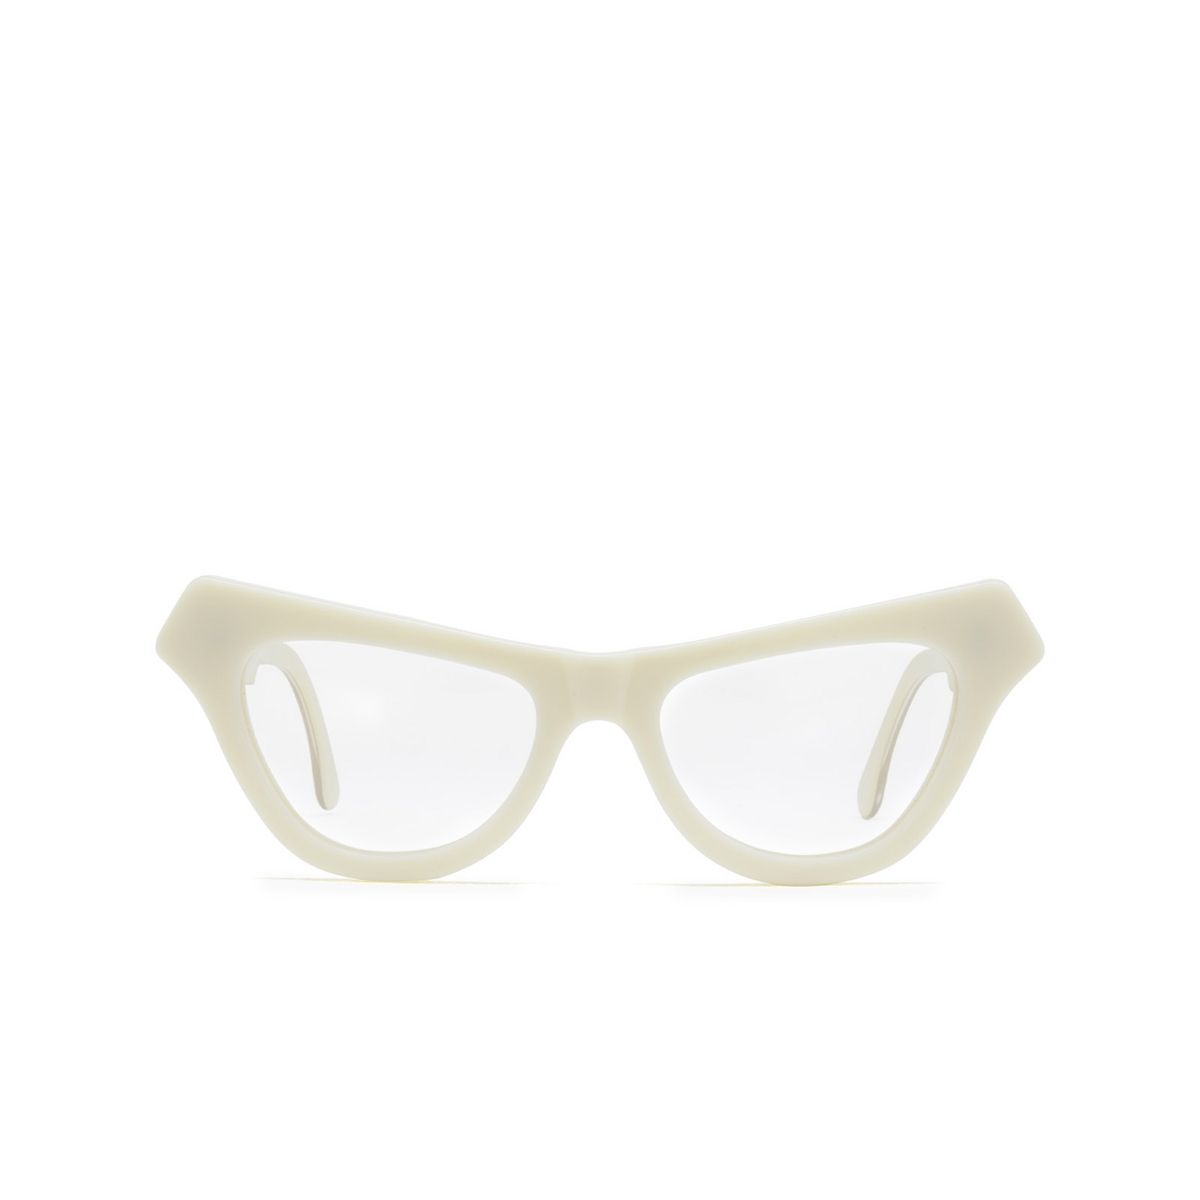 Marni® Irregular Eyeglasses: Jeju Island color Panna Qwc - front view.